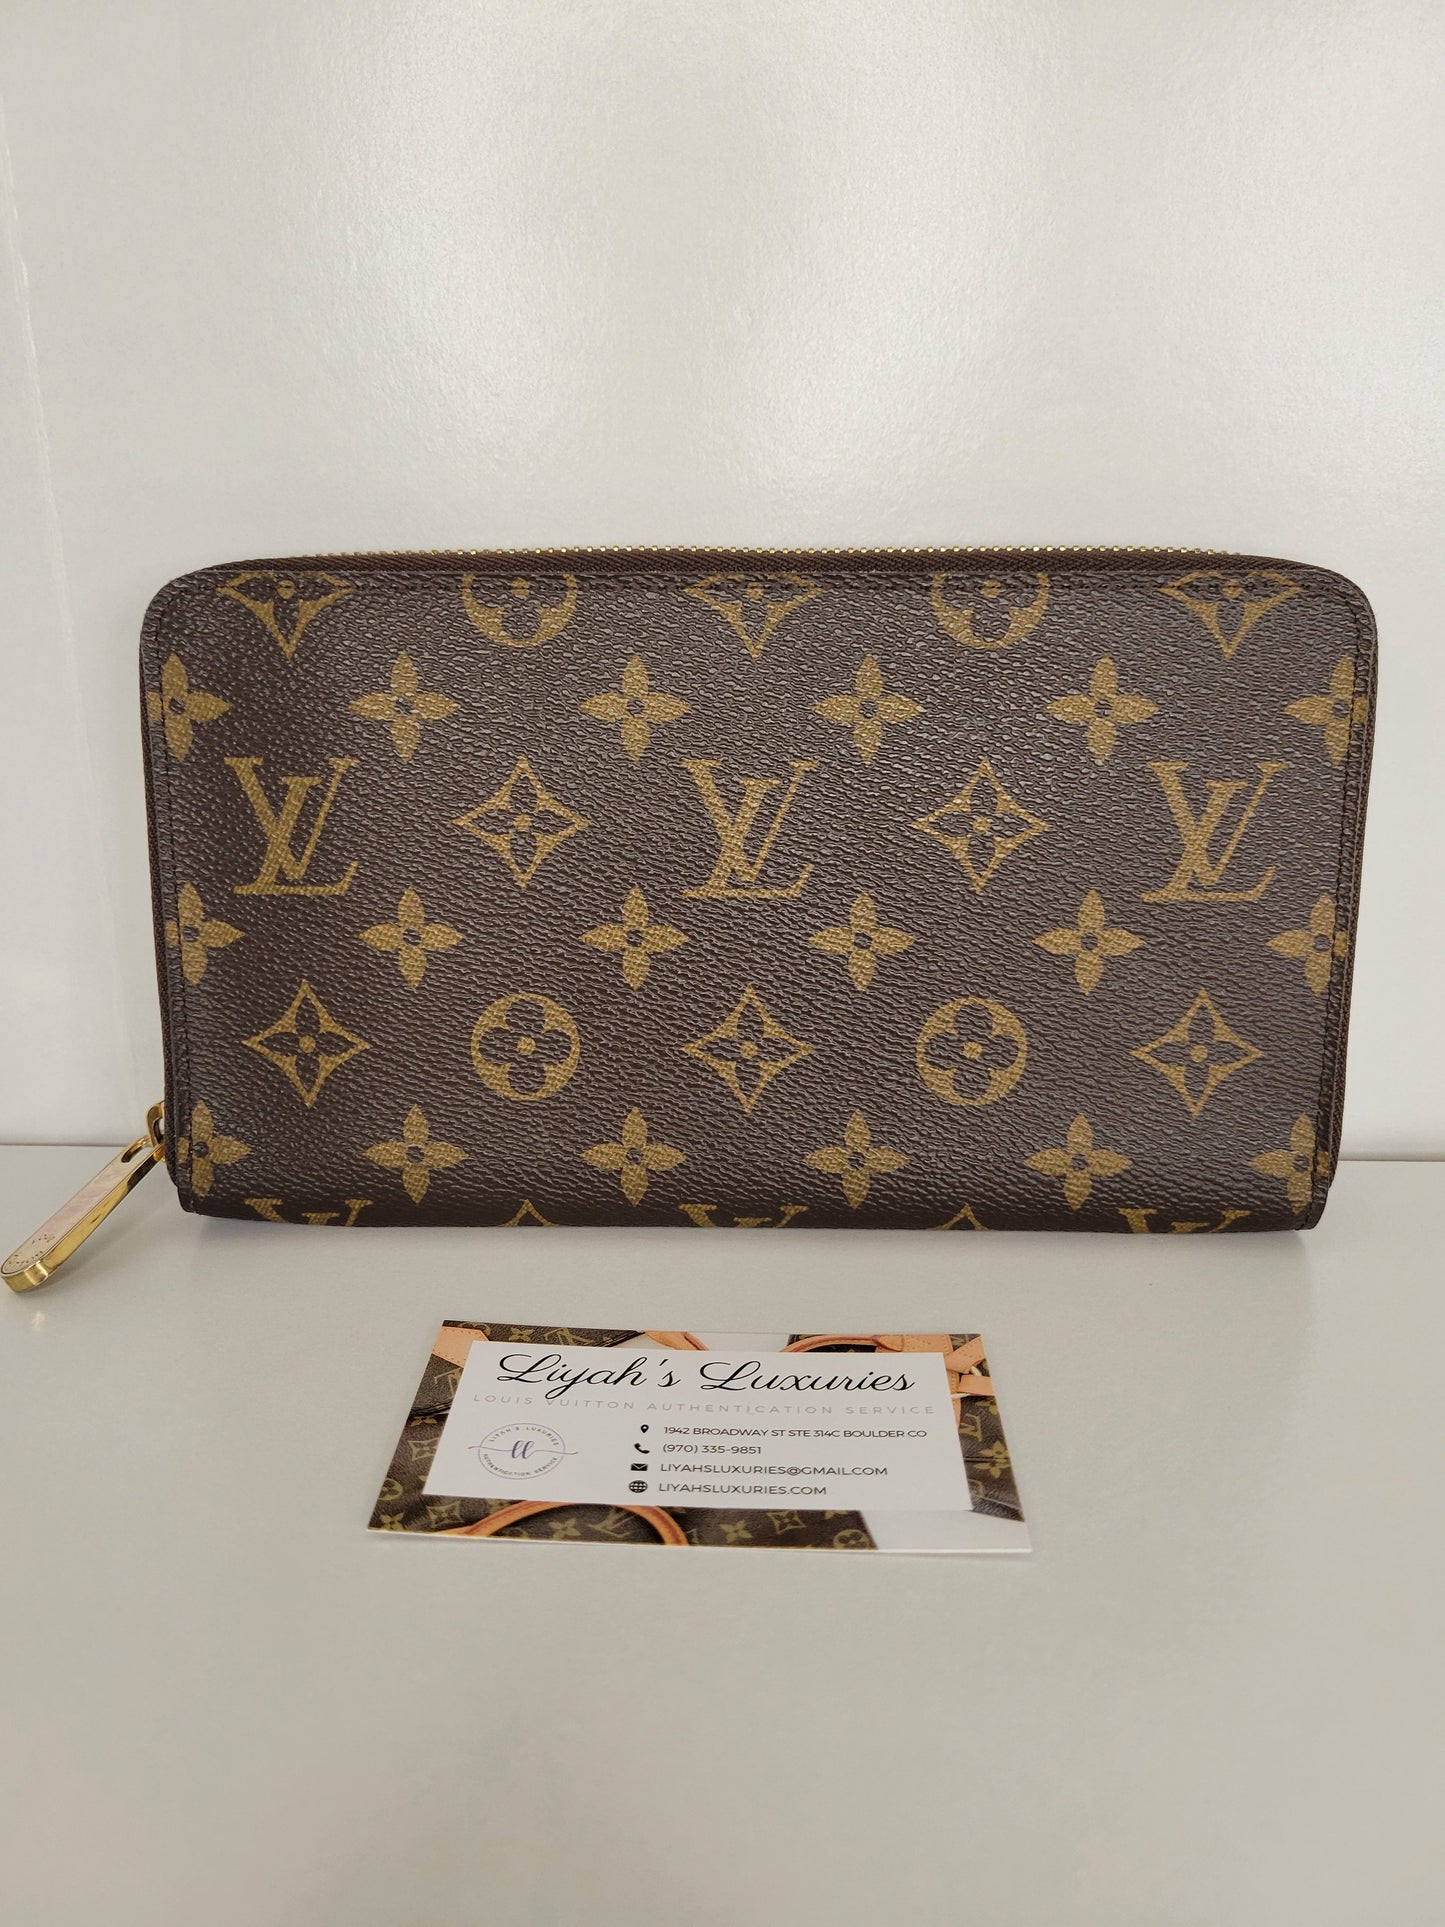 Louis Vuitton Authenticated Wallet